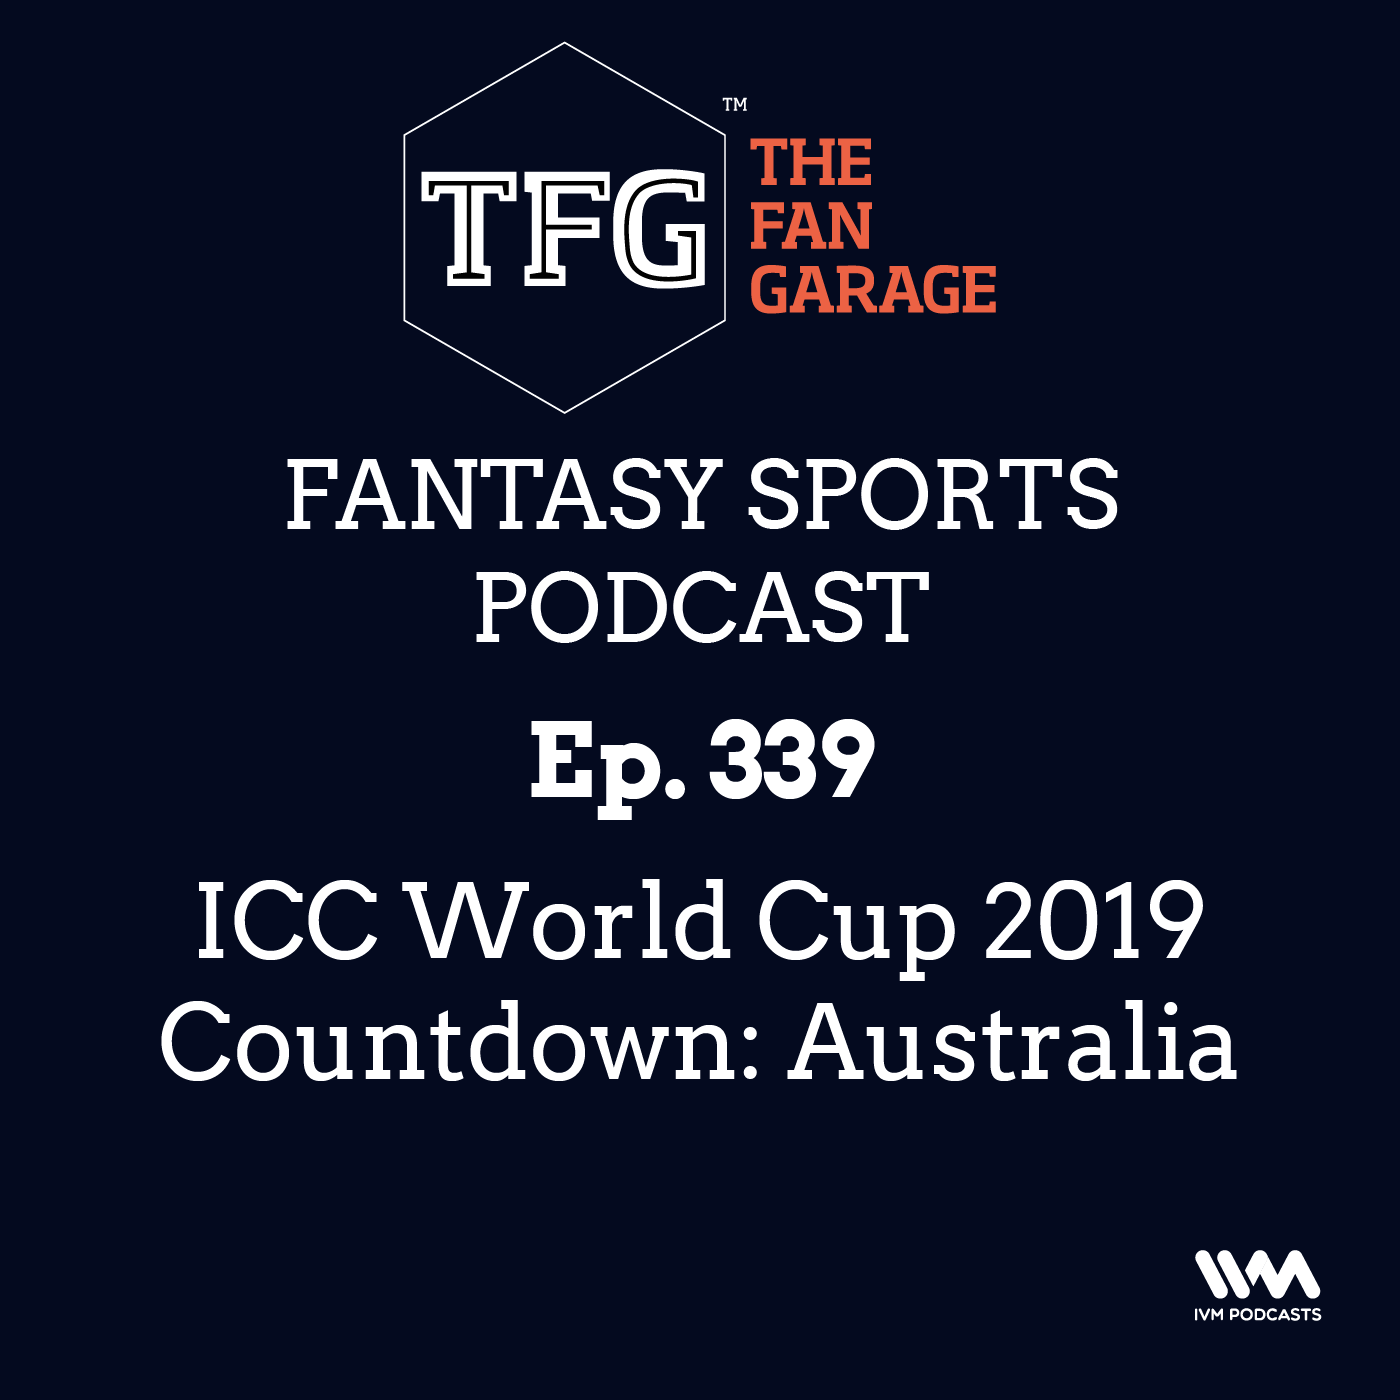 TFG Fantasy Sports Podcast Ep. 339: ICC World Cup 2019 Countdown: Australia